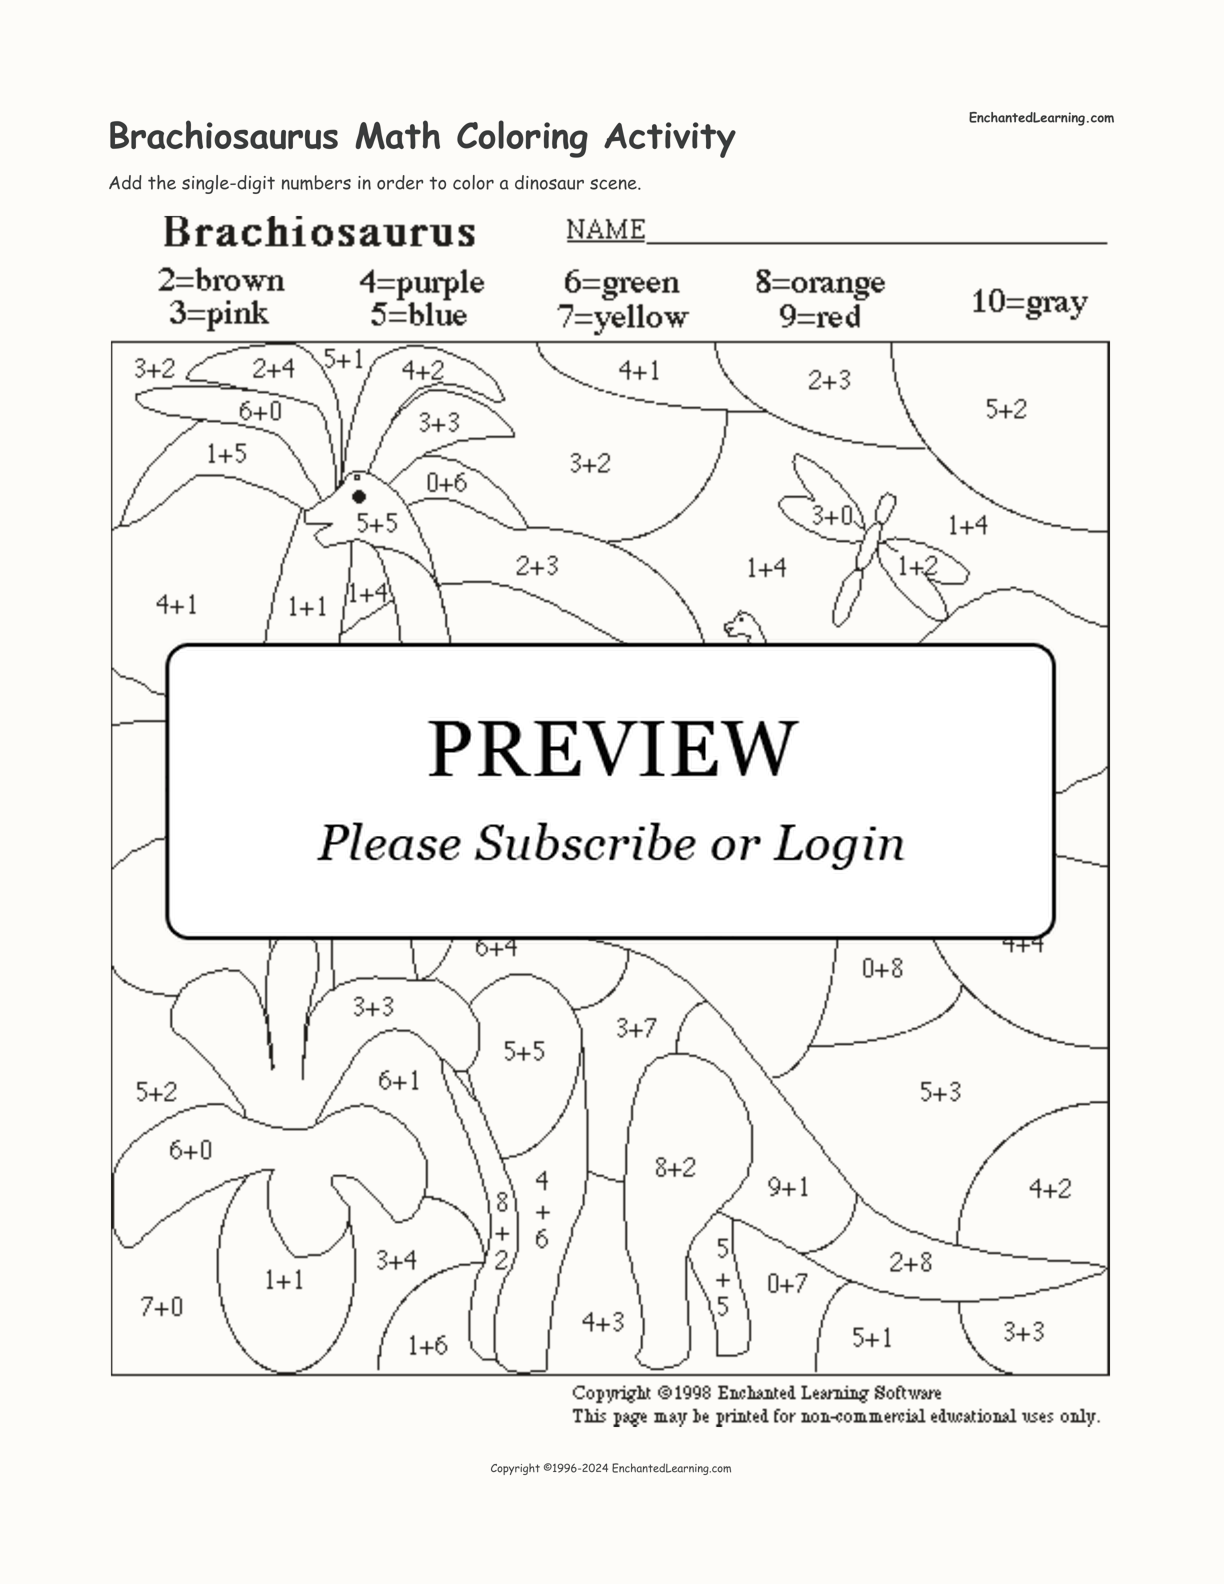 Brachiosaurus Math Coloring Activity interactive worksheet page 1